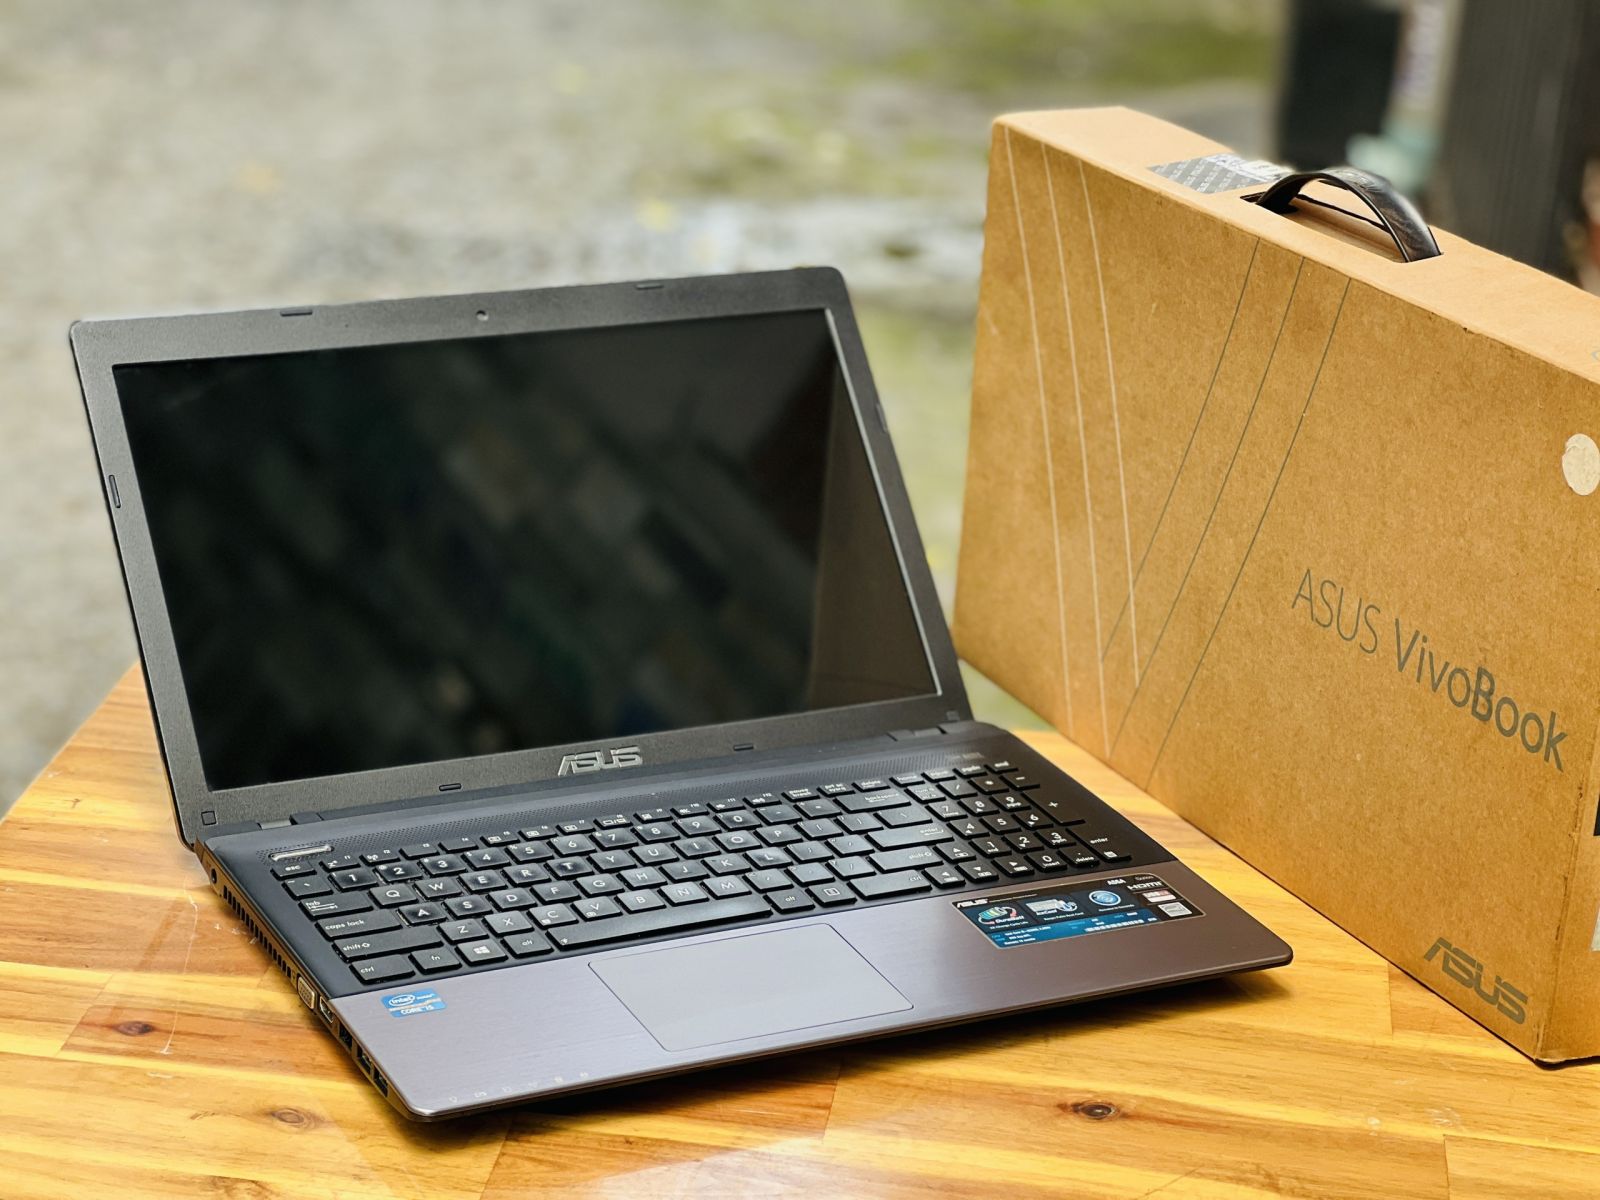 Laptop ASUS K55VD I5 cũ giá rẻ